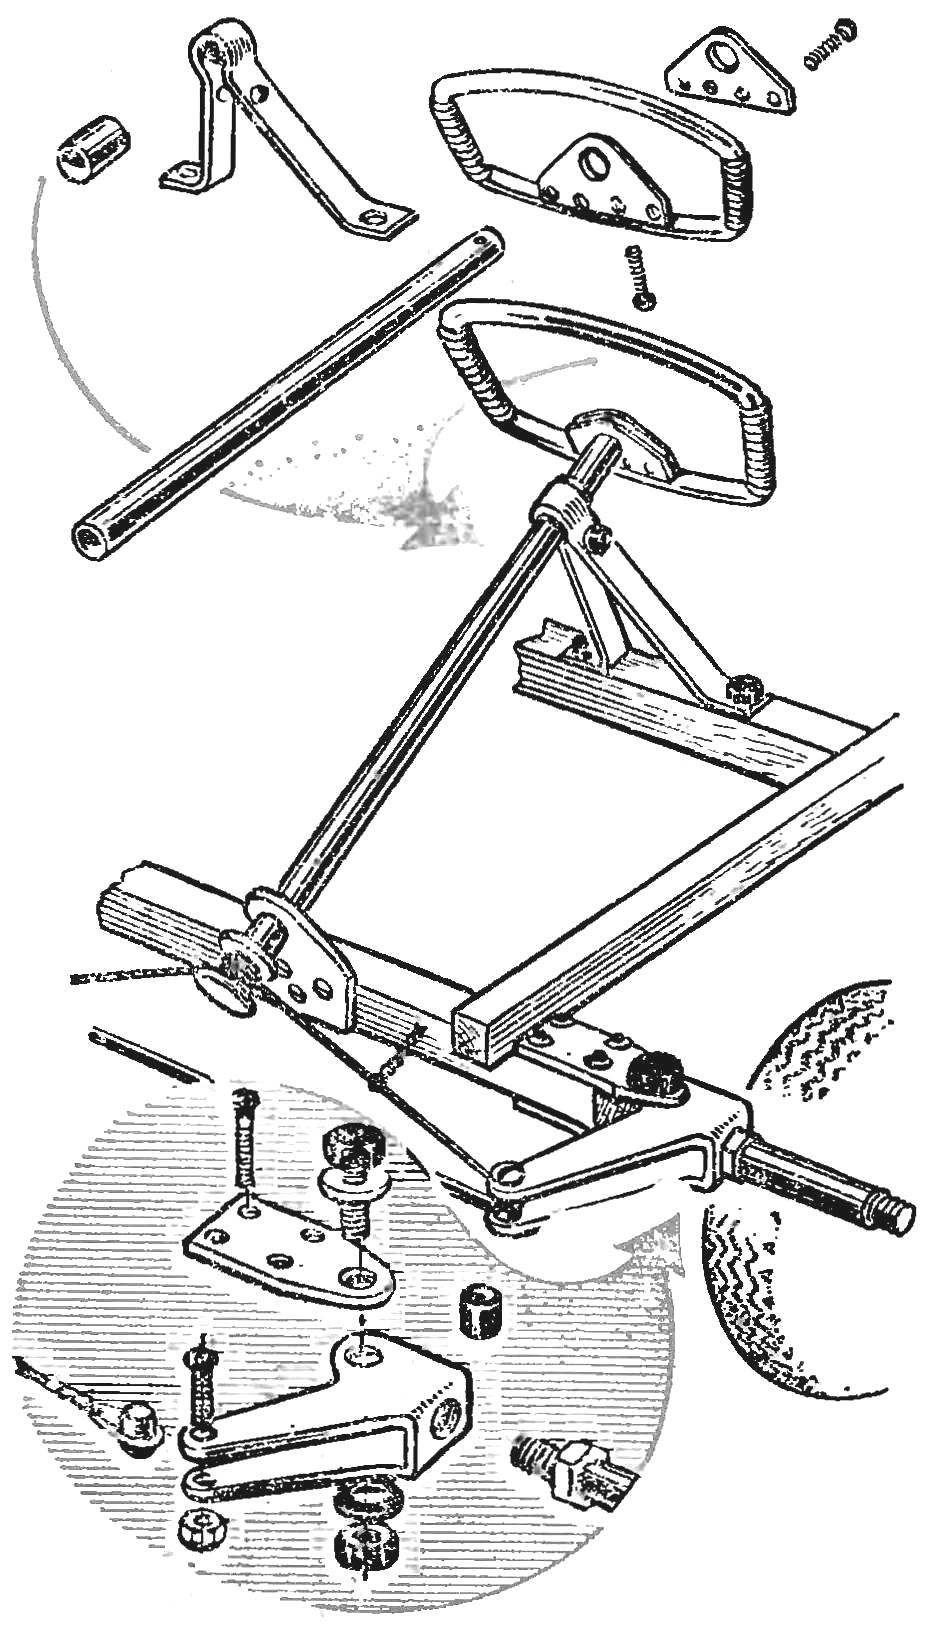 Fig. 2 the Braking device minicar.